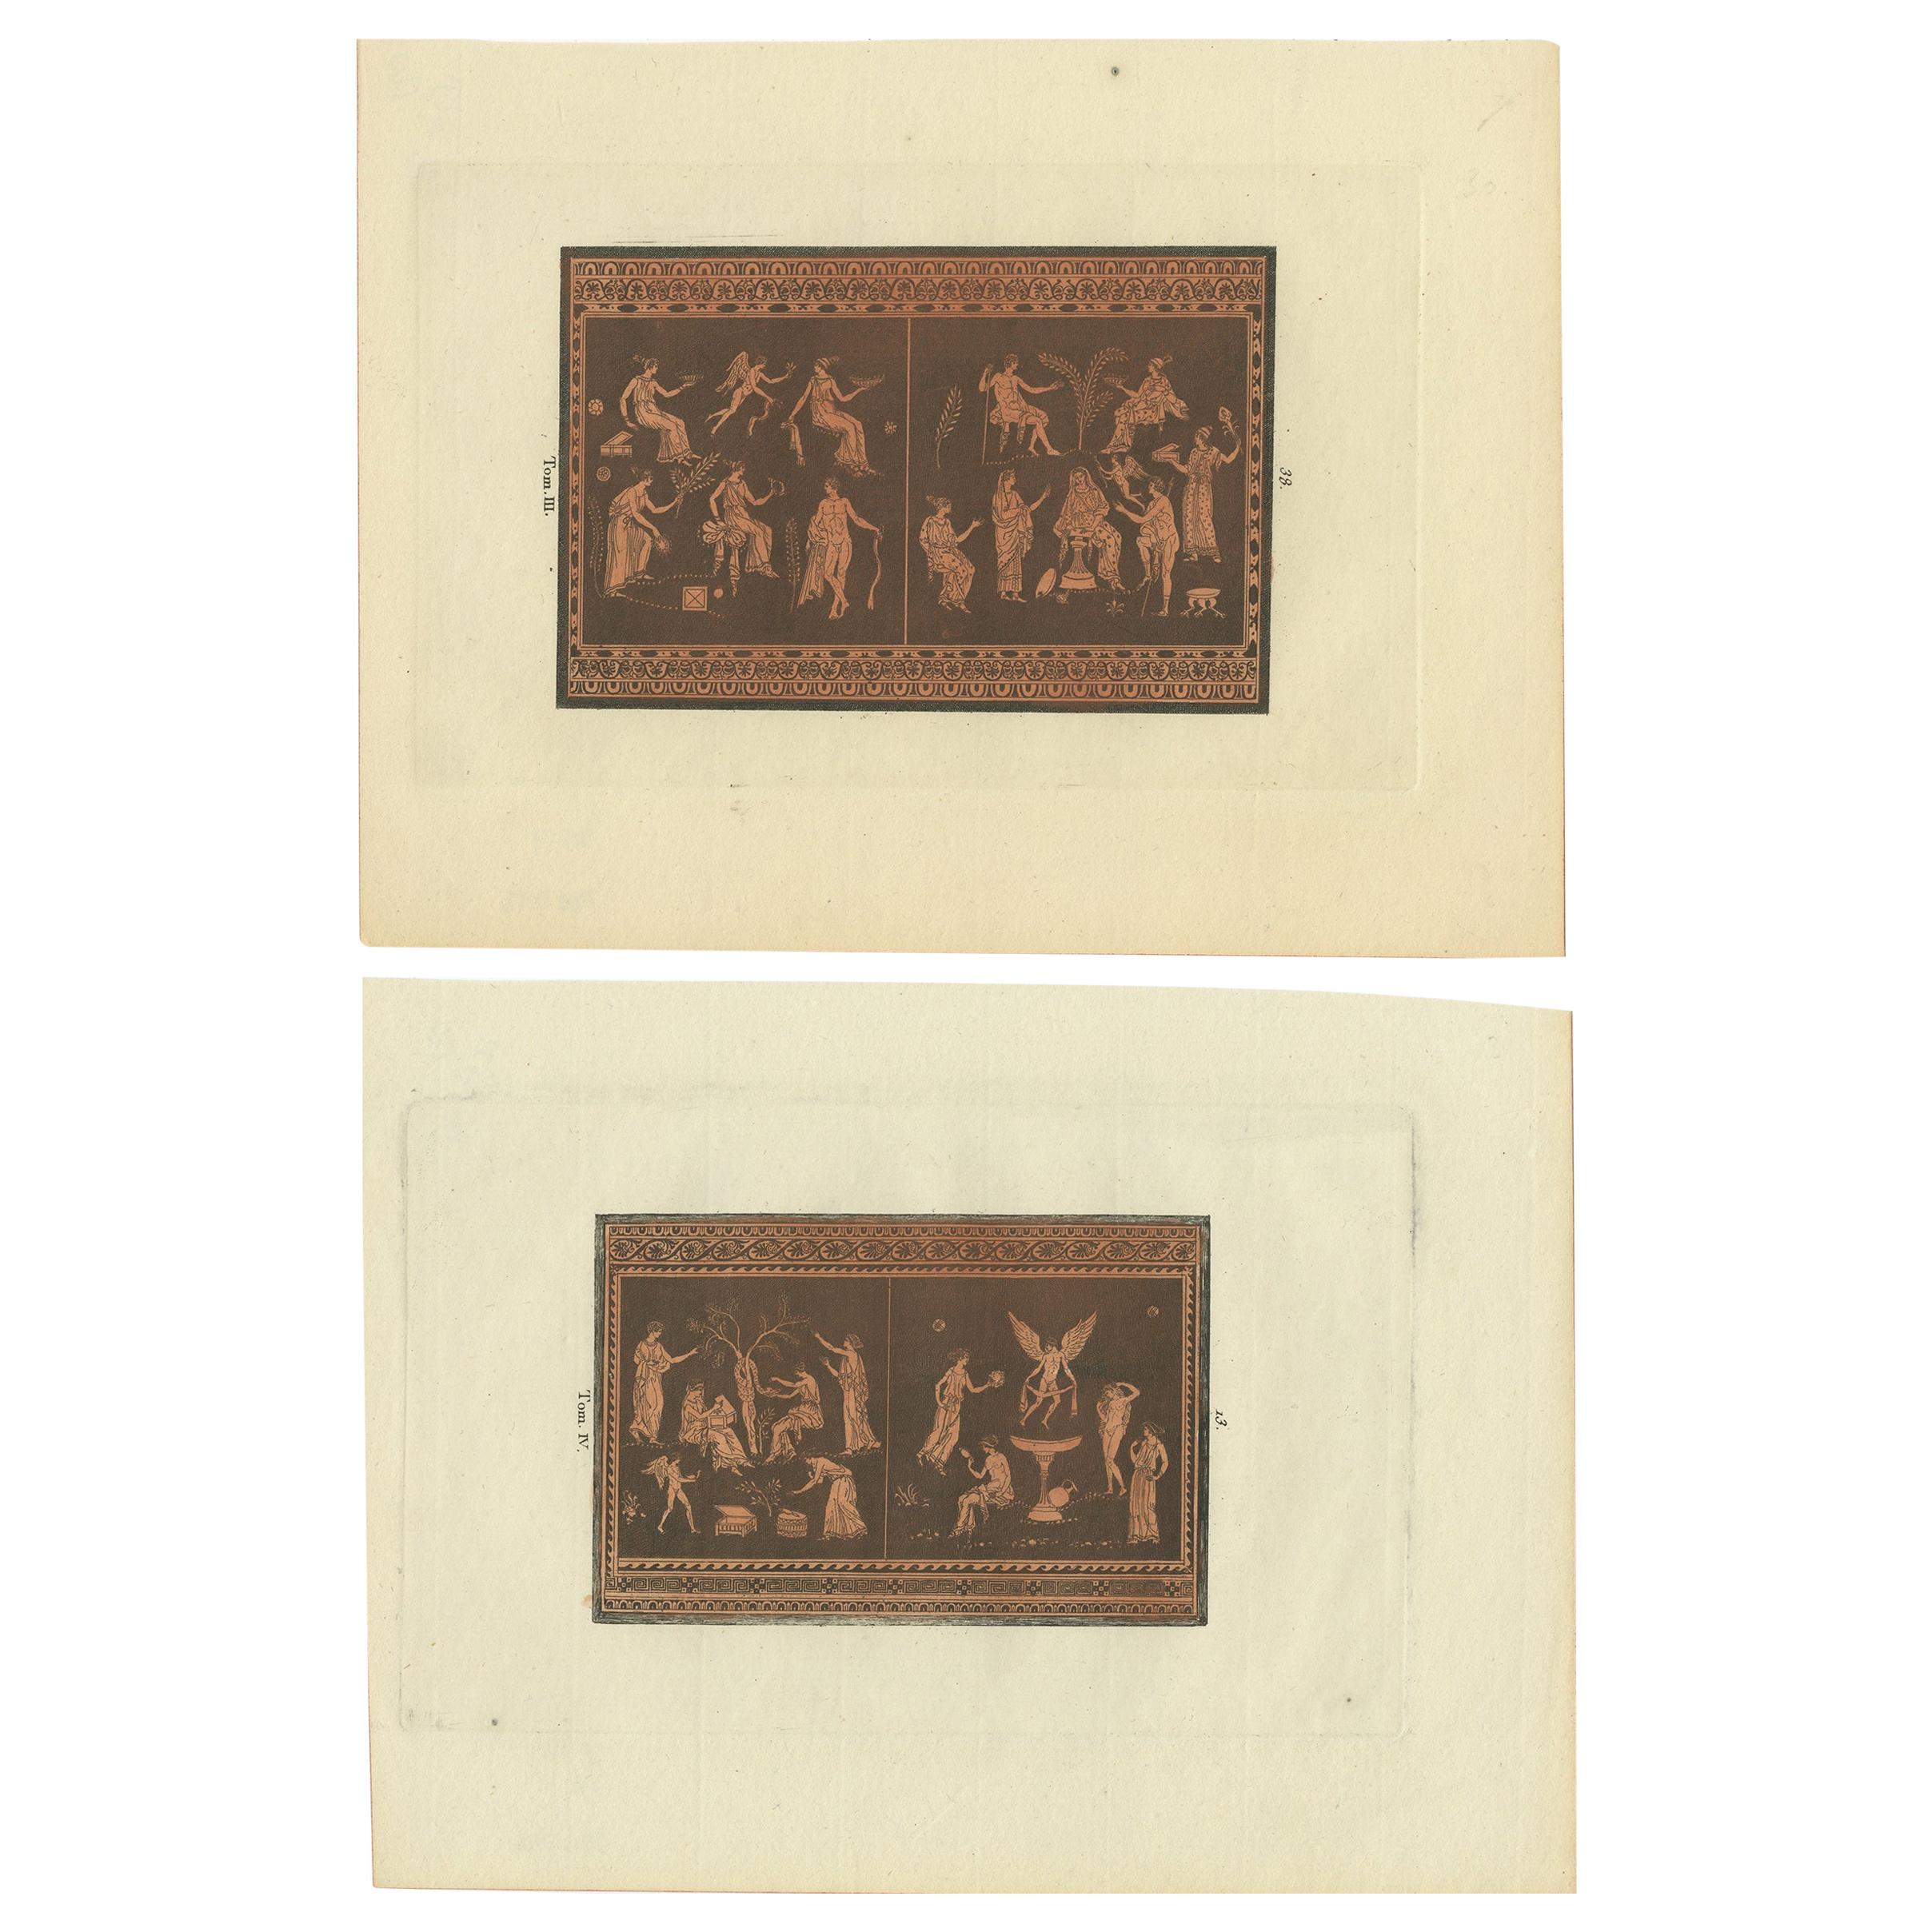 Set of 2 Antique Prints Depicting Various Figures and Scenes, circa 1840